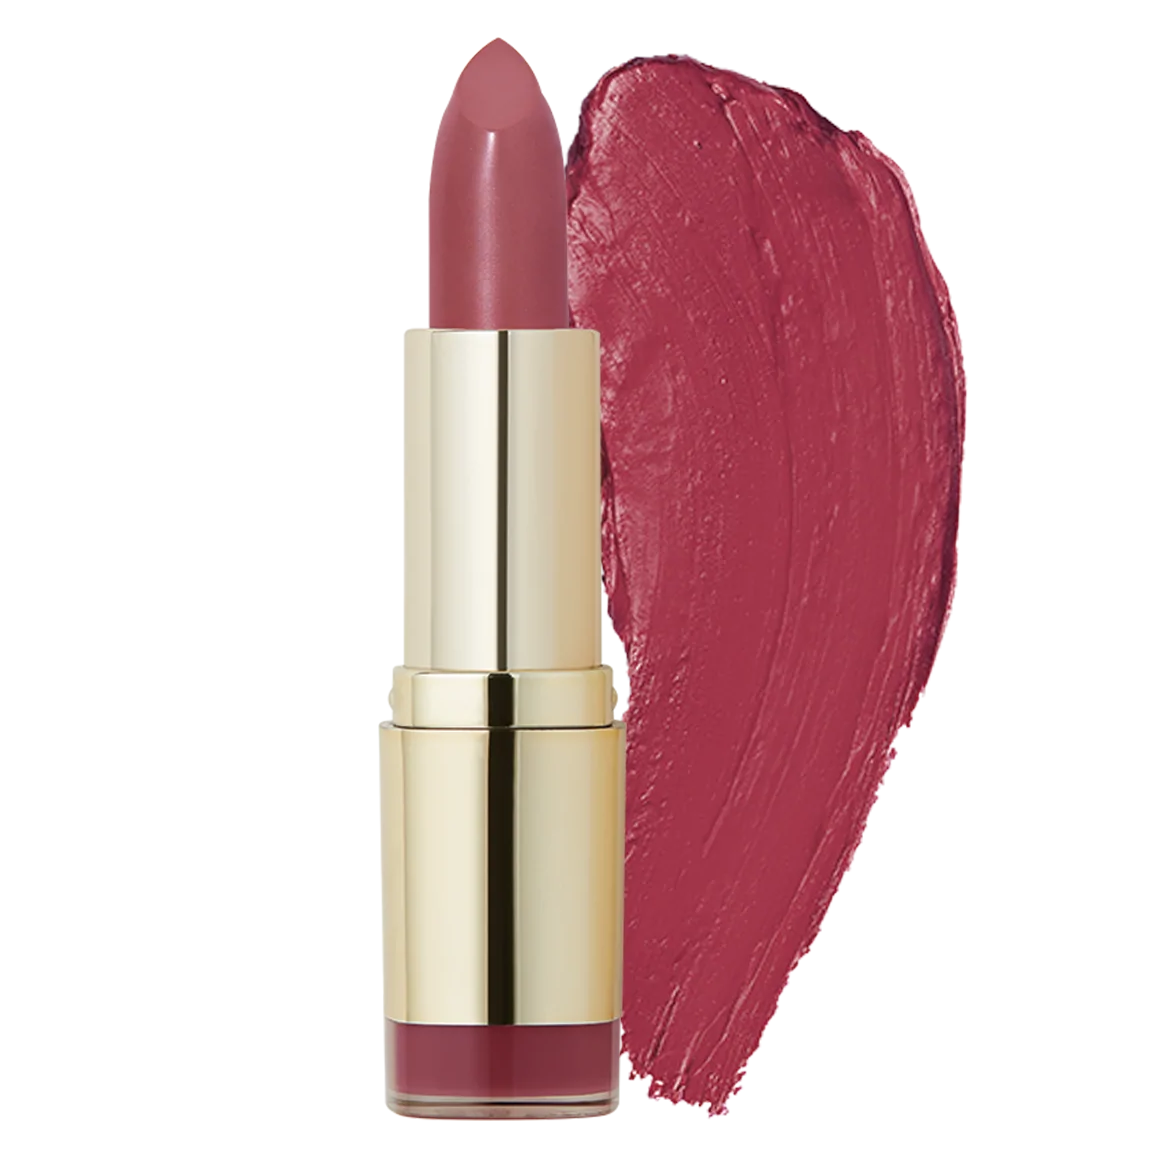 MILANI Color Statement Lipstick - Plumrose #17